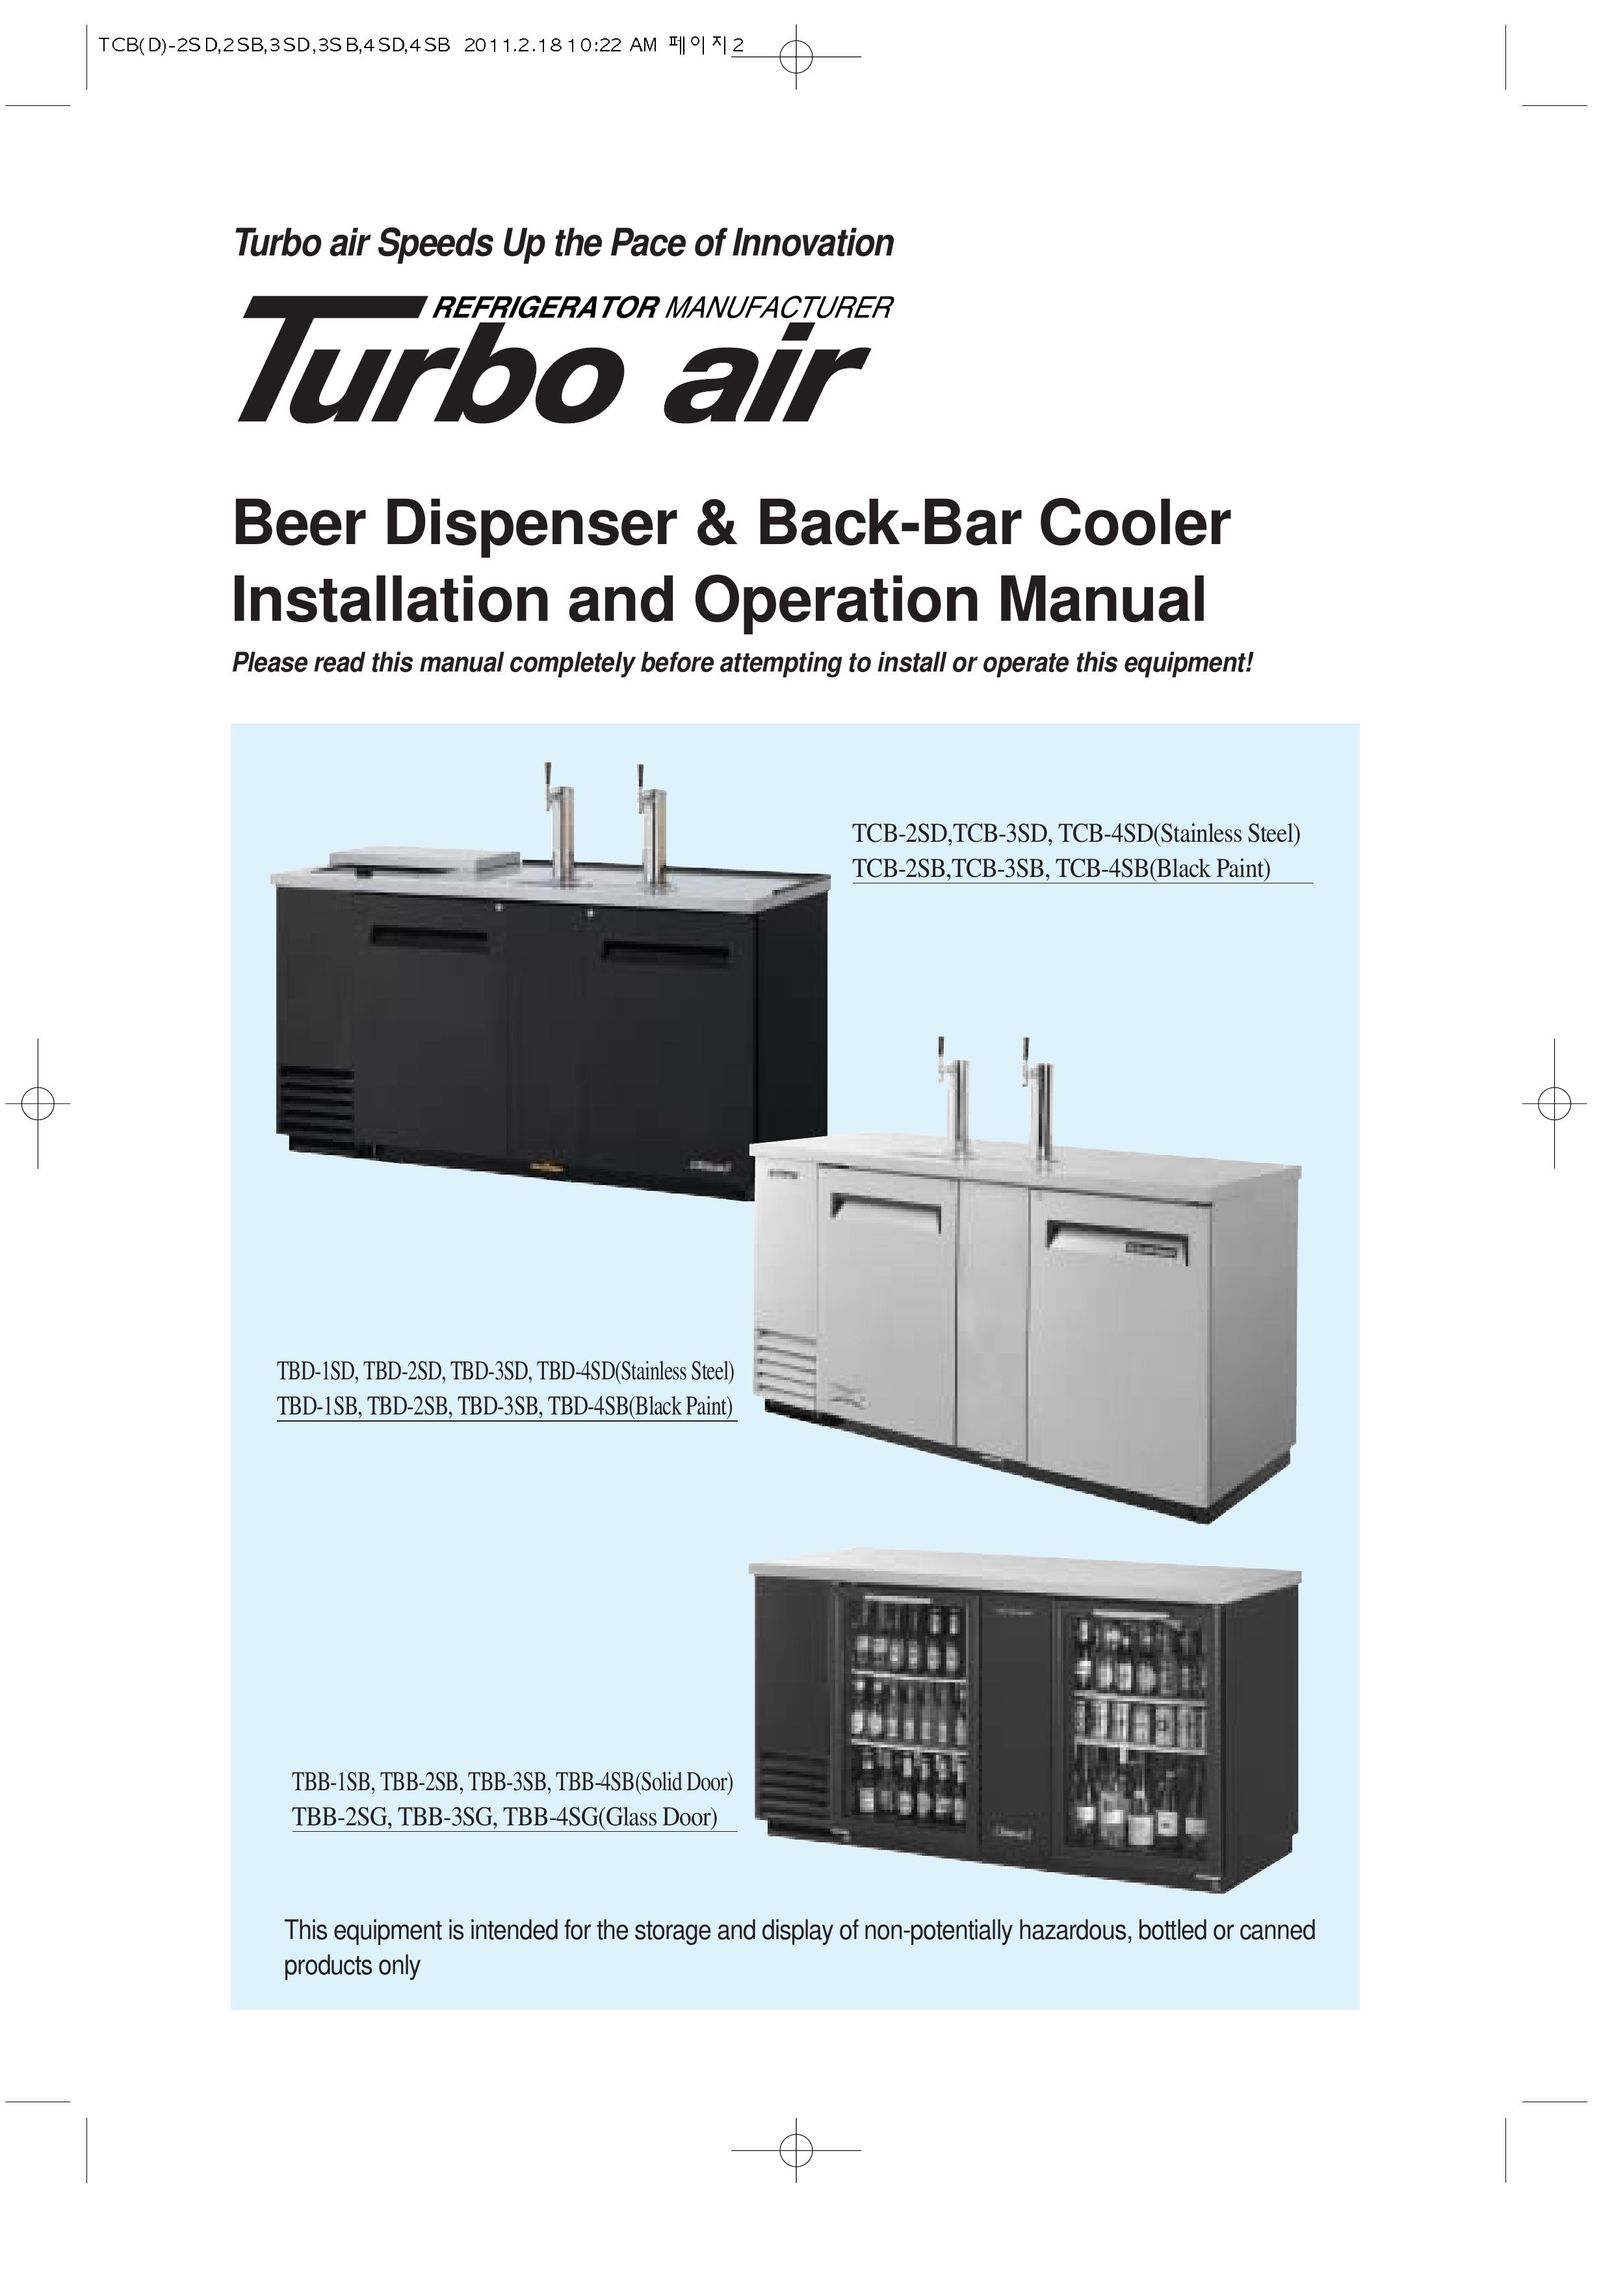 Turbo Air TBD-3SD Beverage Dispenser User Manual